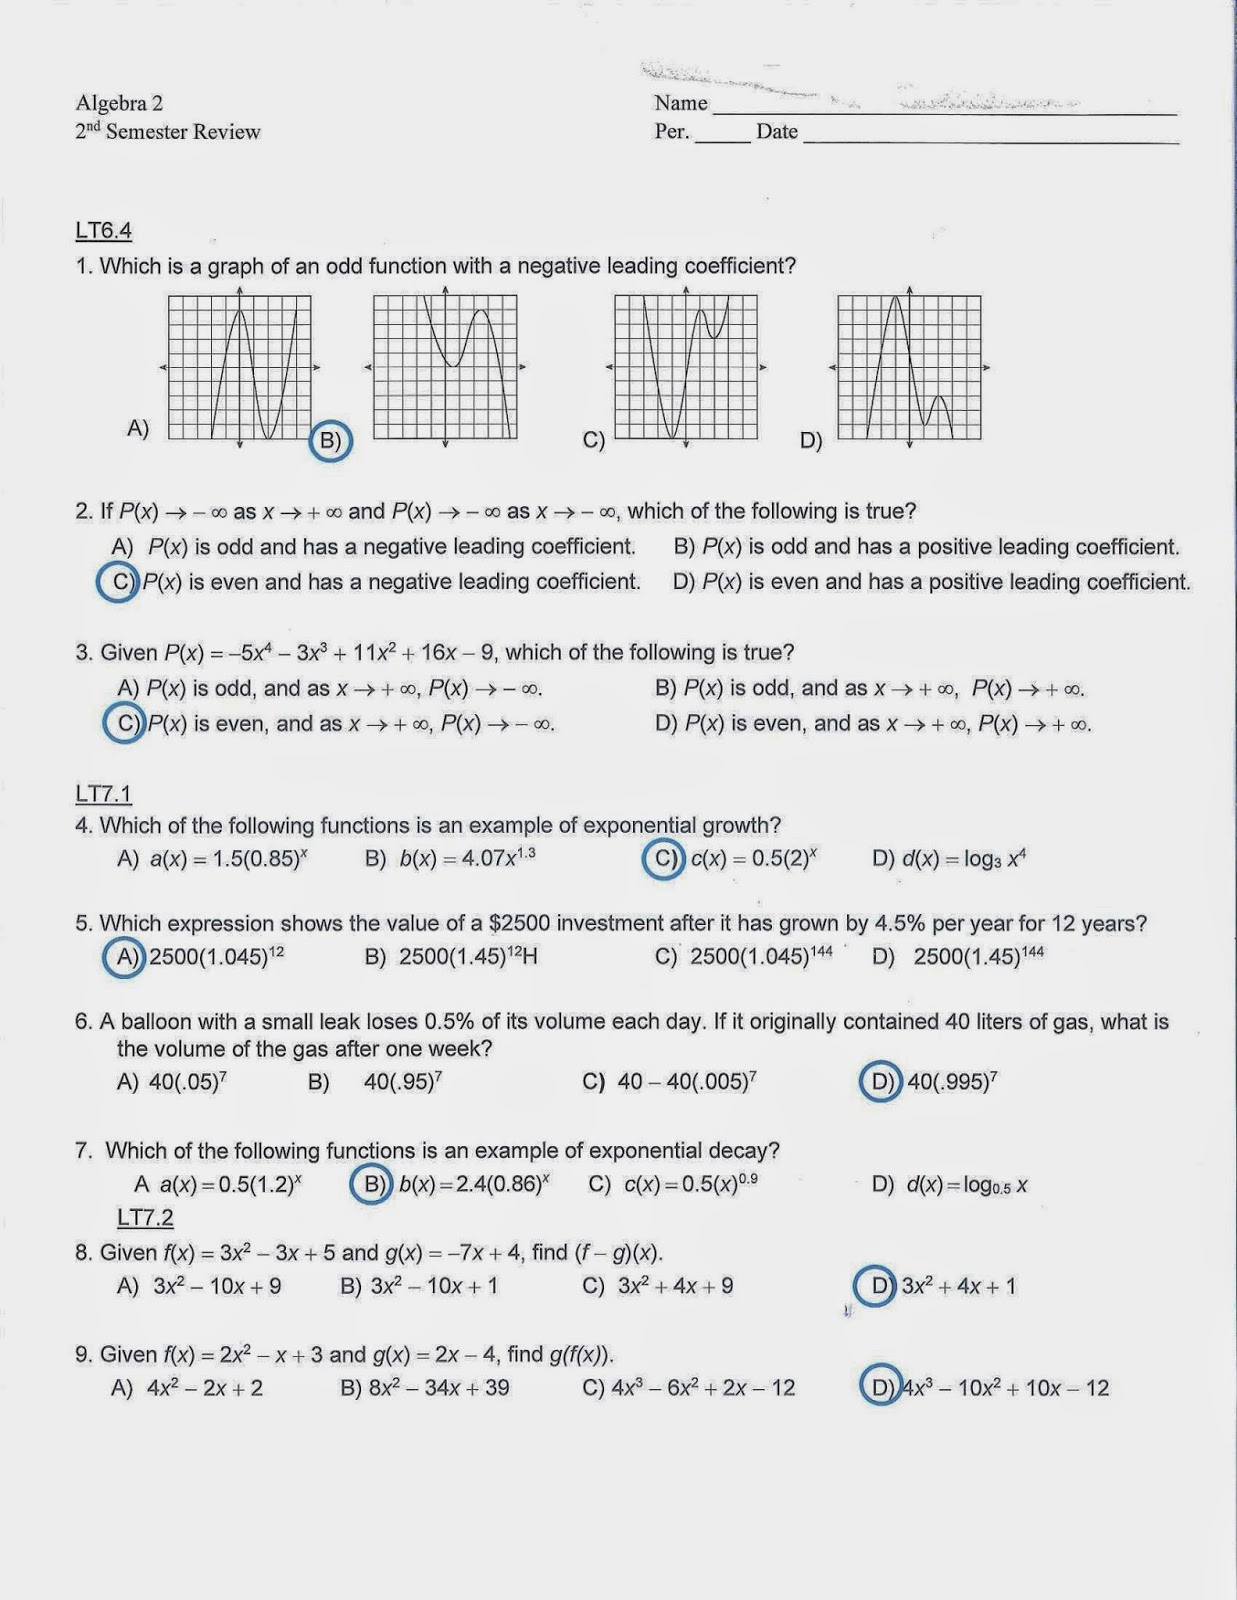 Byu Algebra 2 Part 1 Final Exam Answers